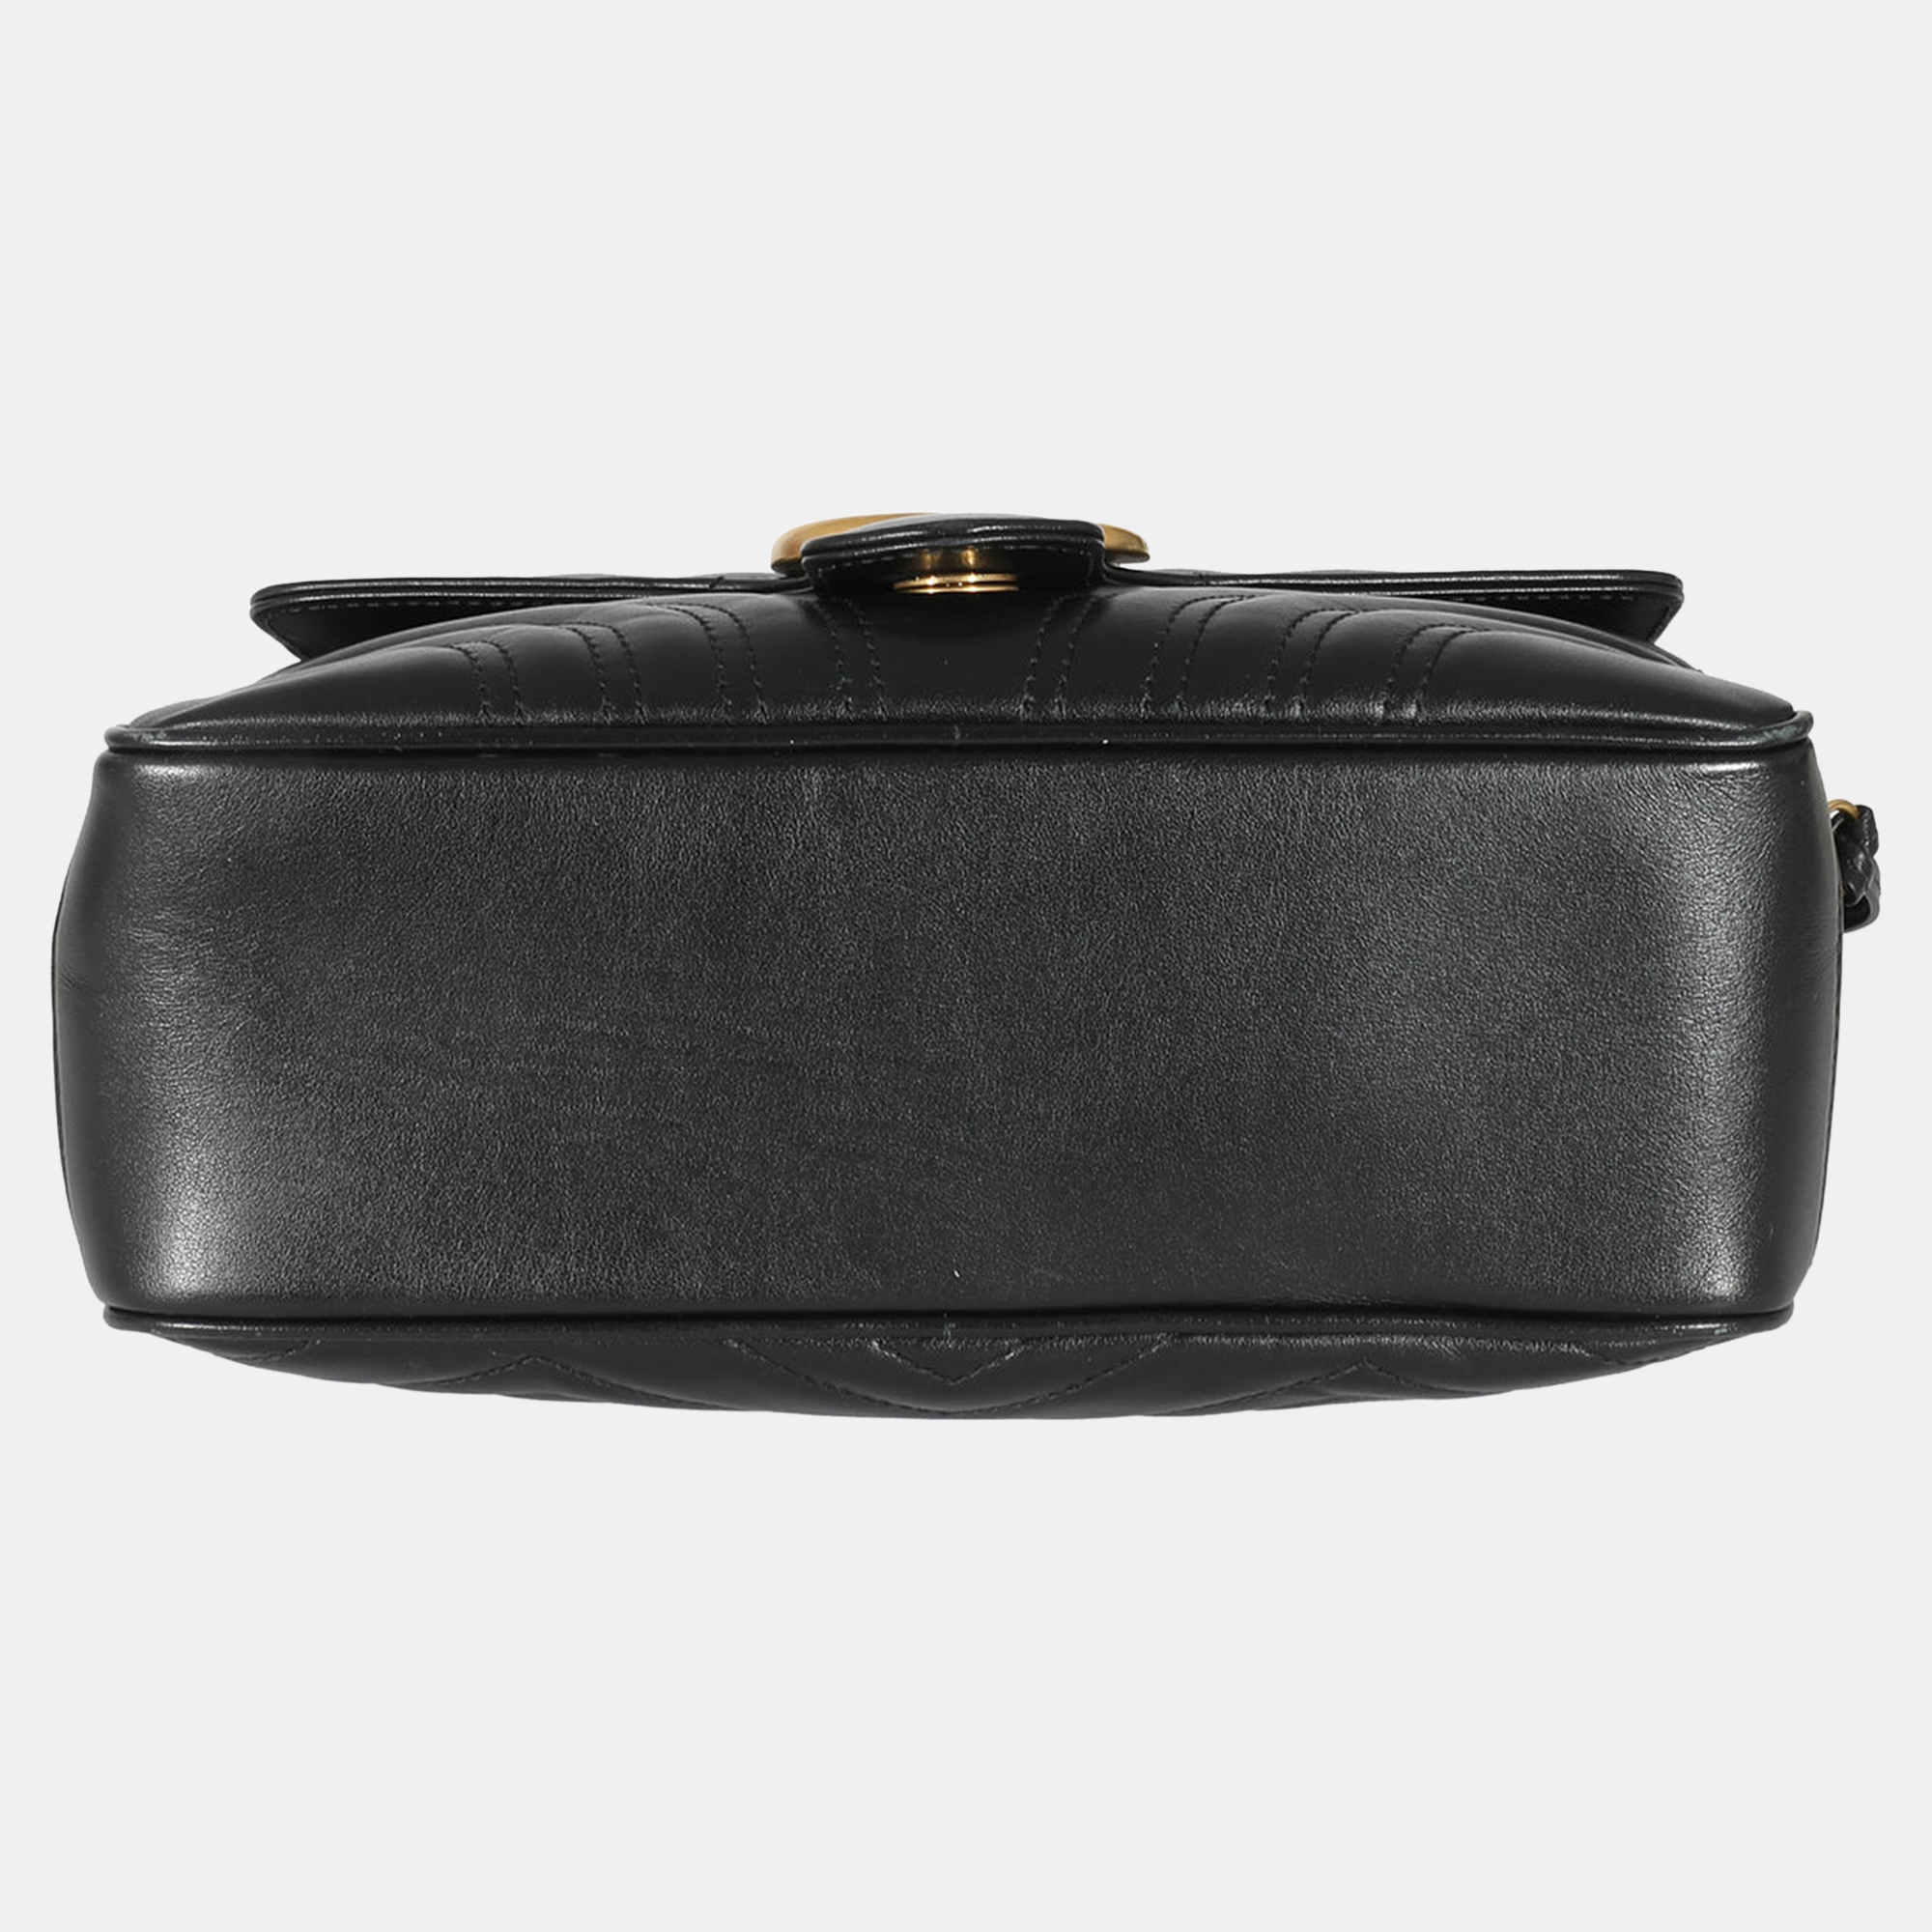 Gucci Black Matelasse Leather Small Calfskin Matelasse Sylvie GG Marmont Shoulder Bag